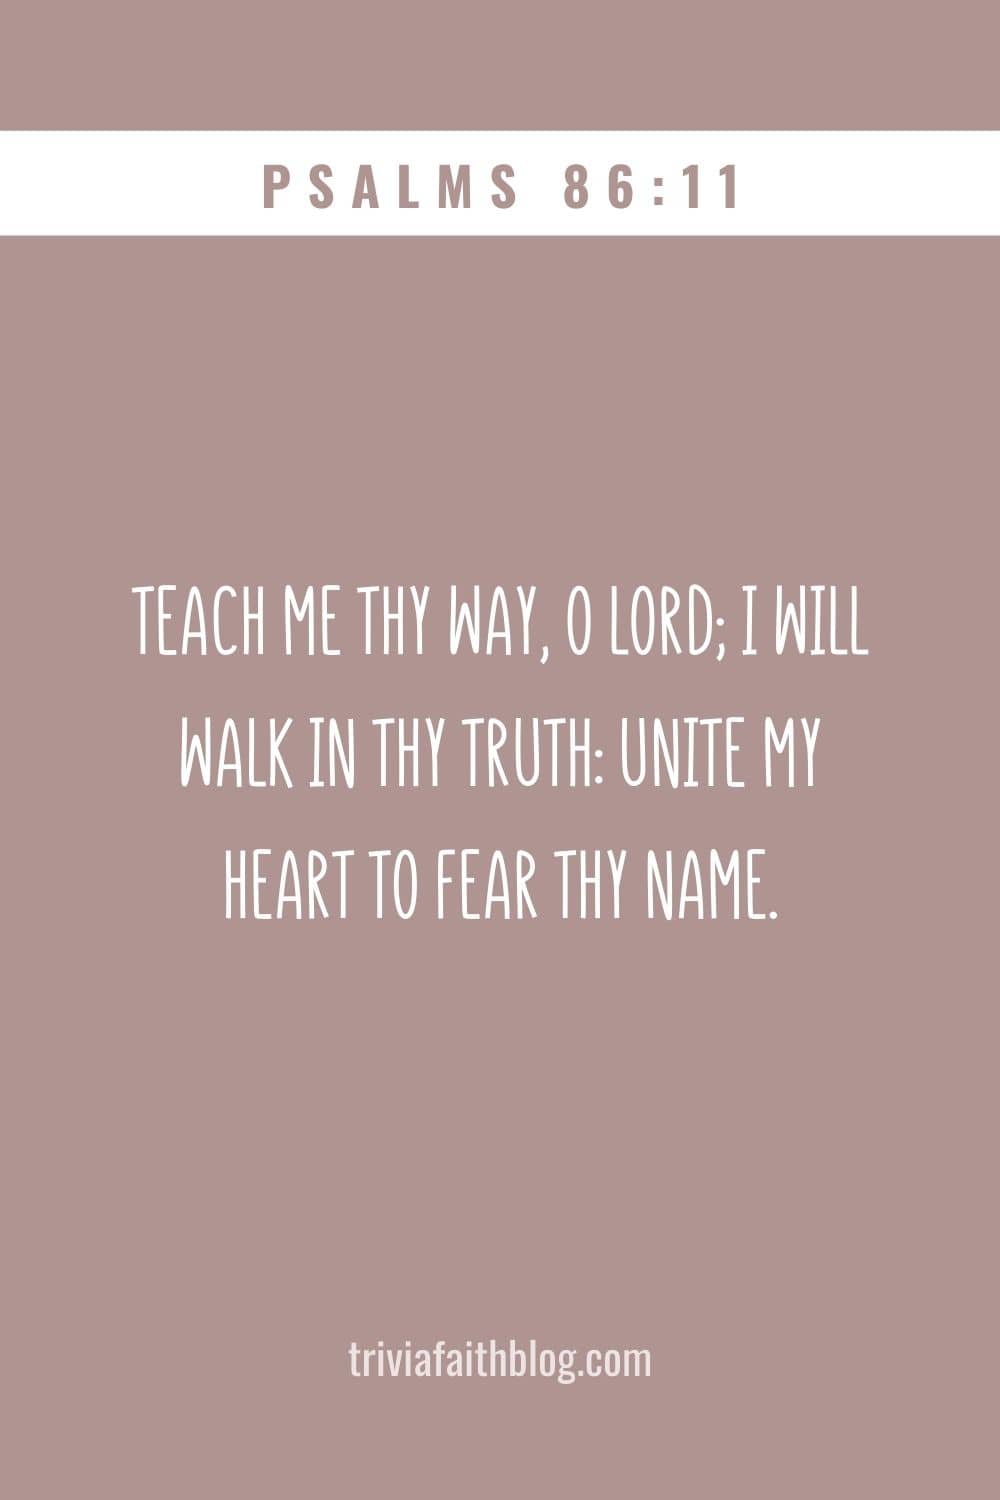 Teach me thy way, O LORD I will walk in thy truth unite my heart to fear thy name